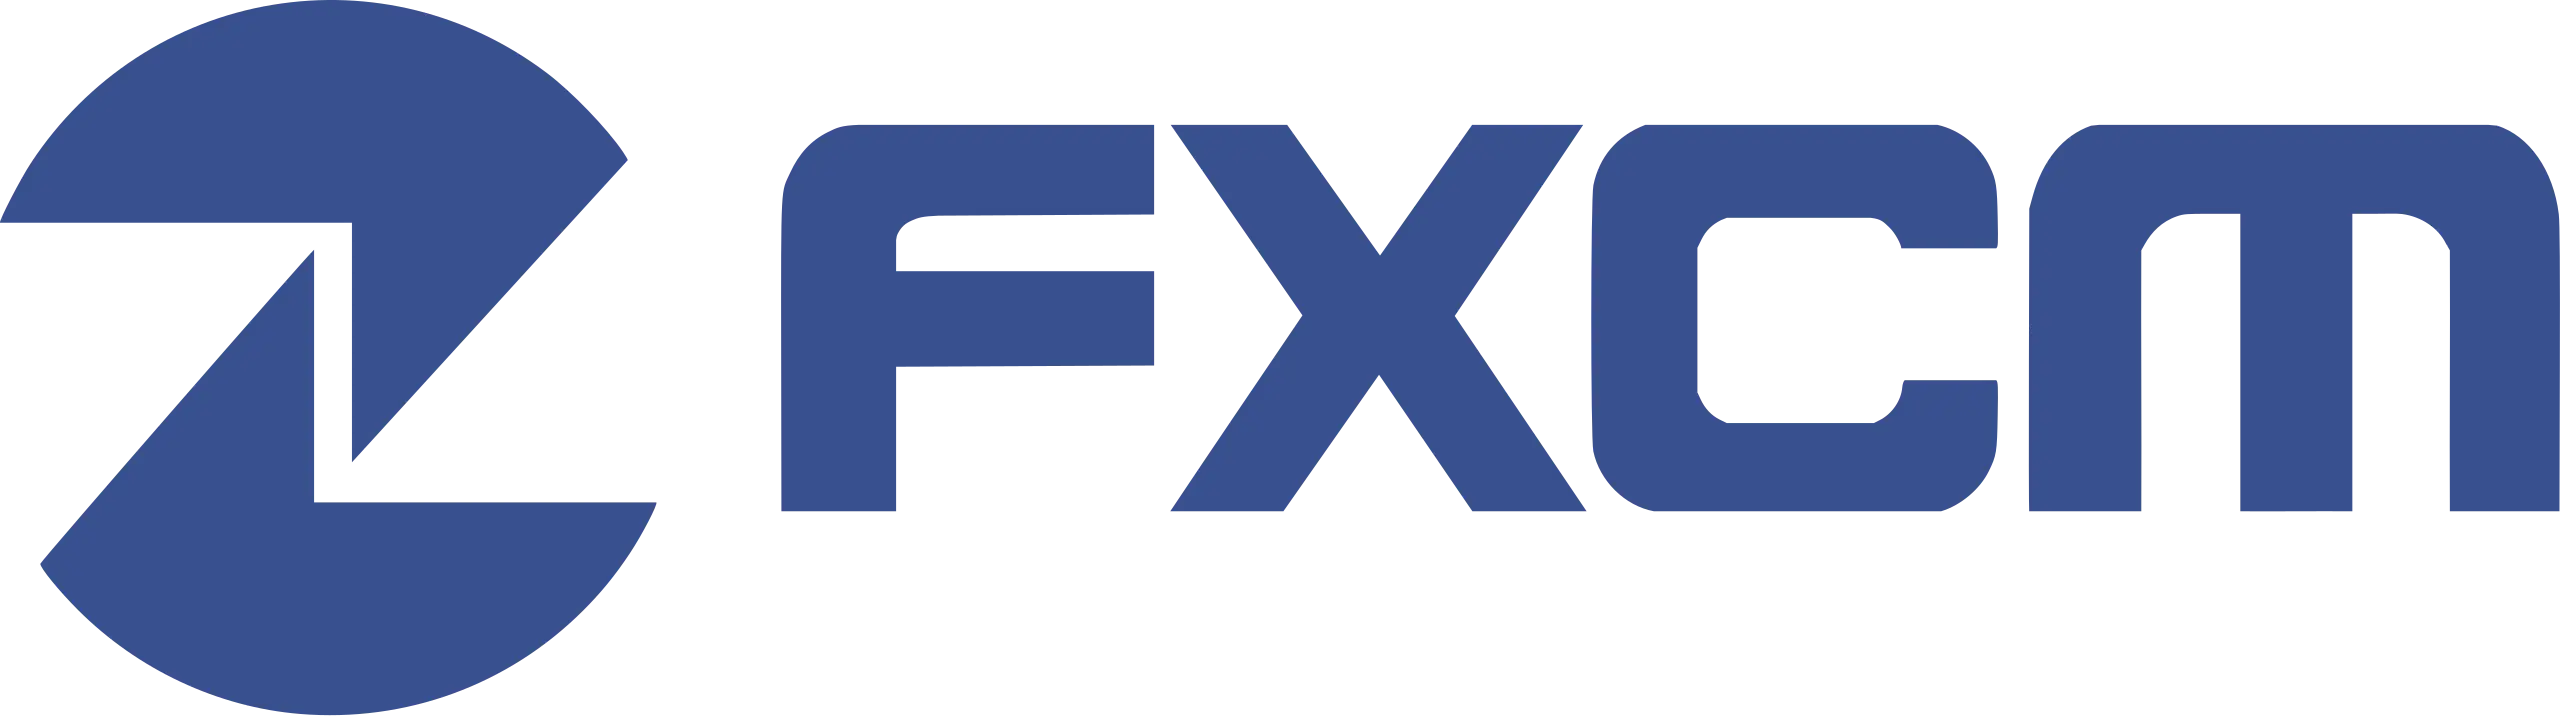 FXCM : FXCM is an online trading broker.